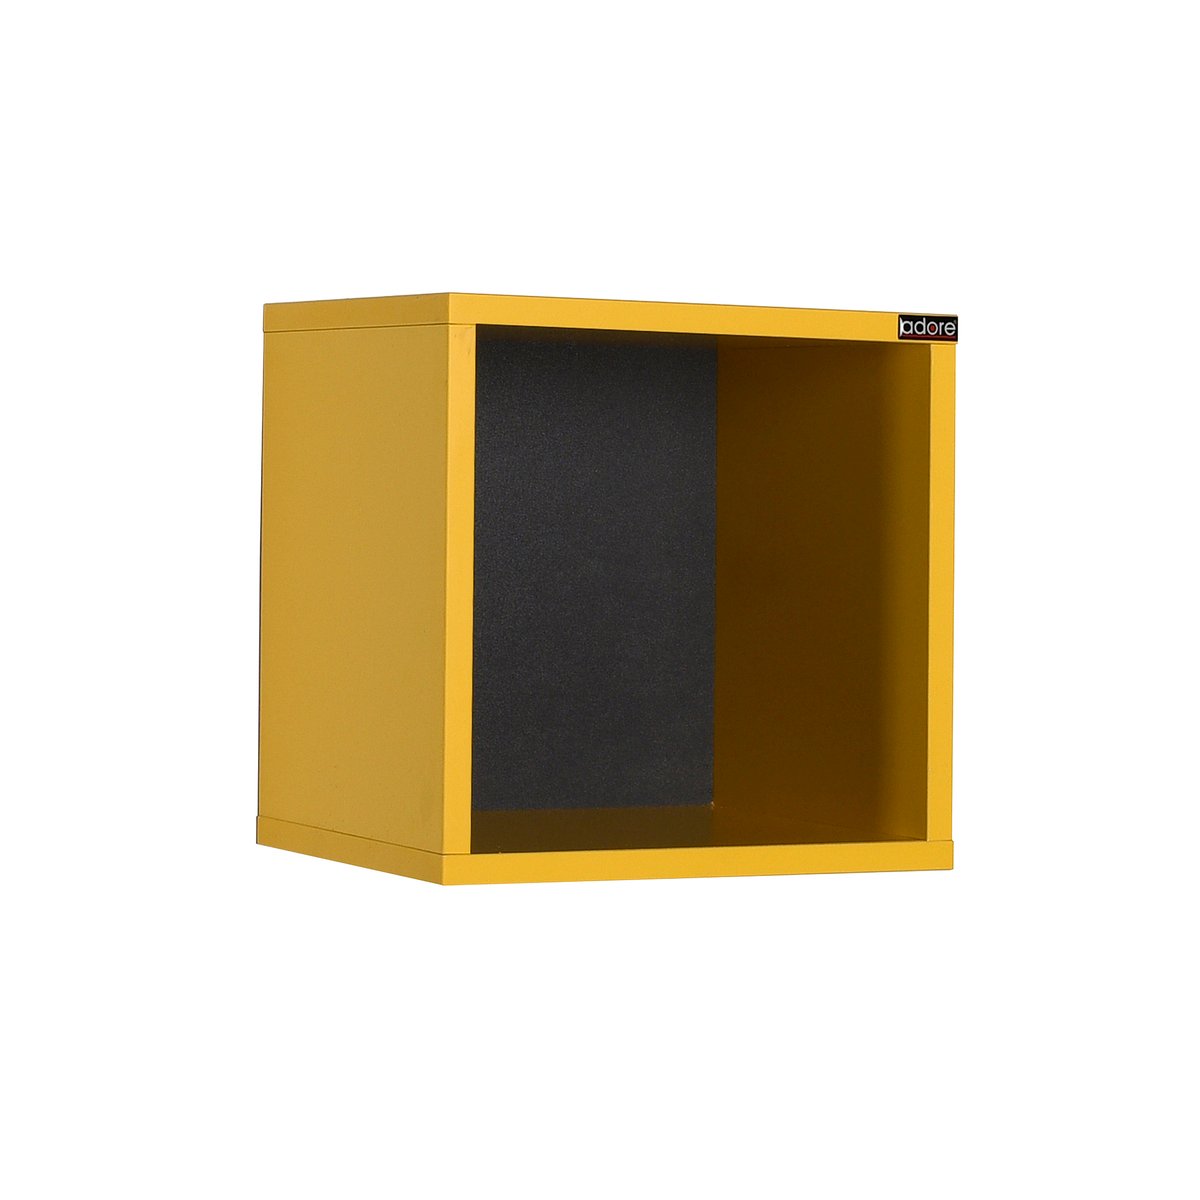 Maple Leaf Wooden Cube Wall Shelves, Display Storage Wood Shelf RAF33 Yellow